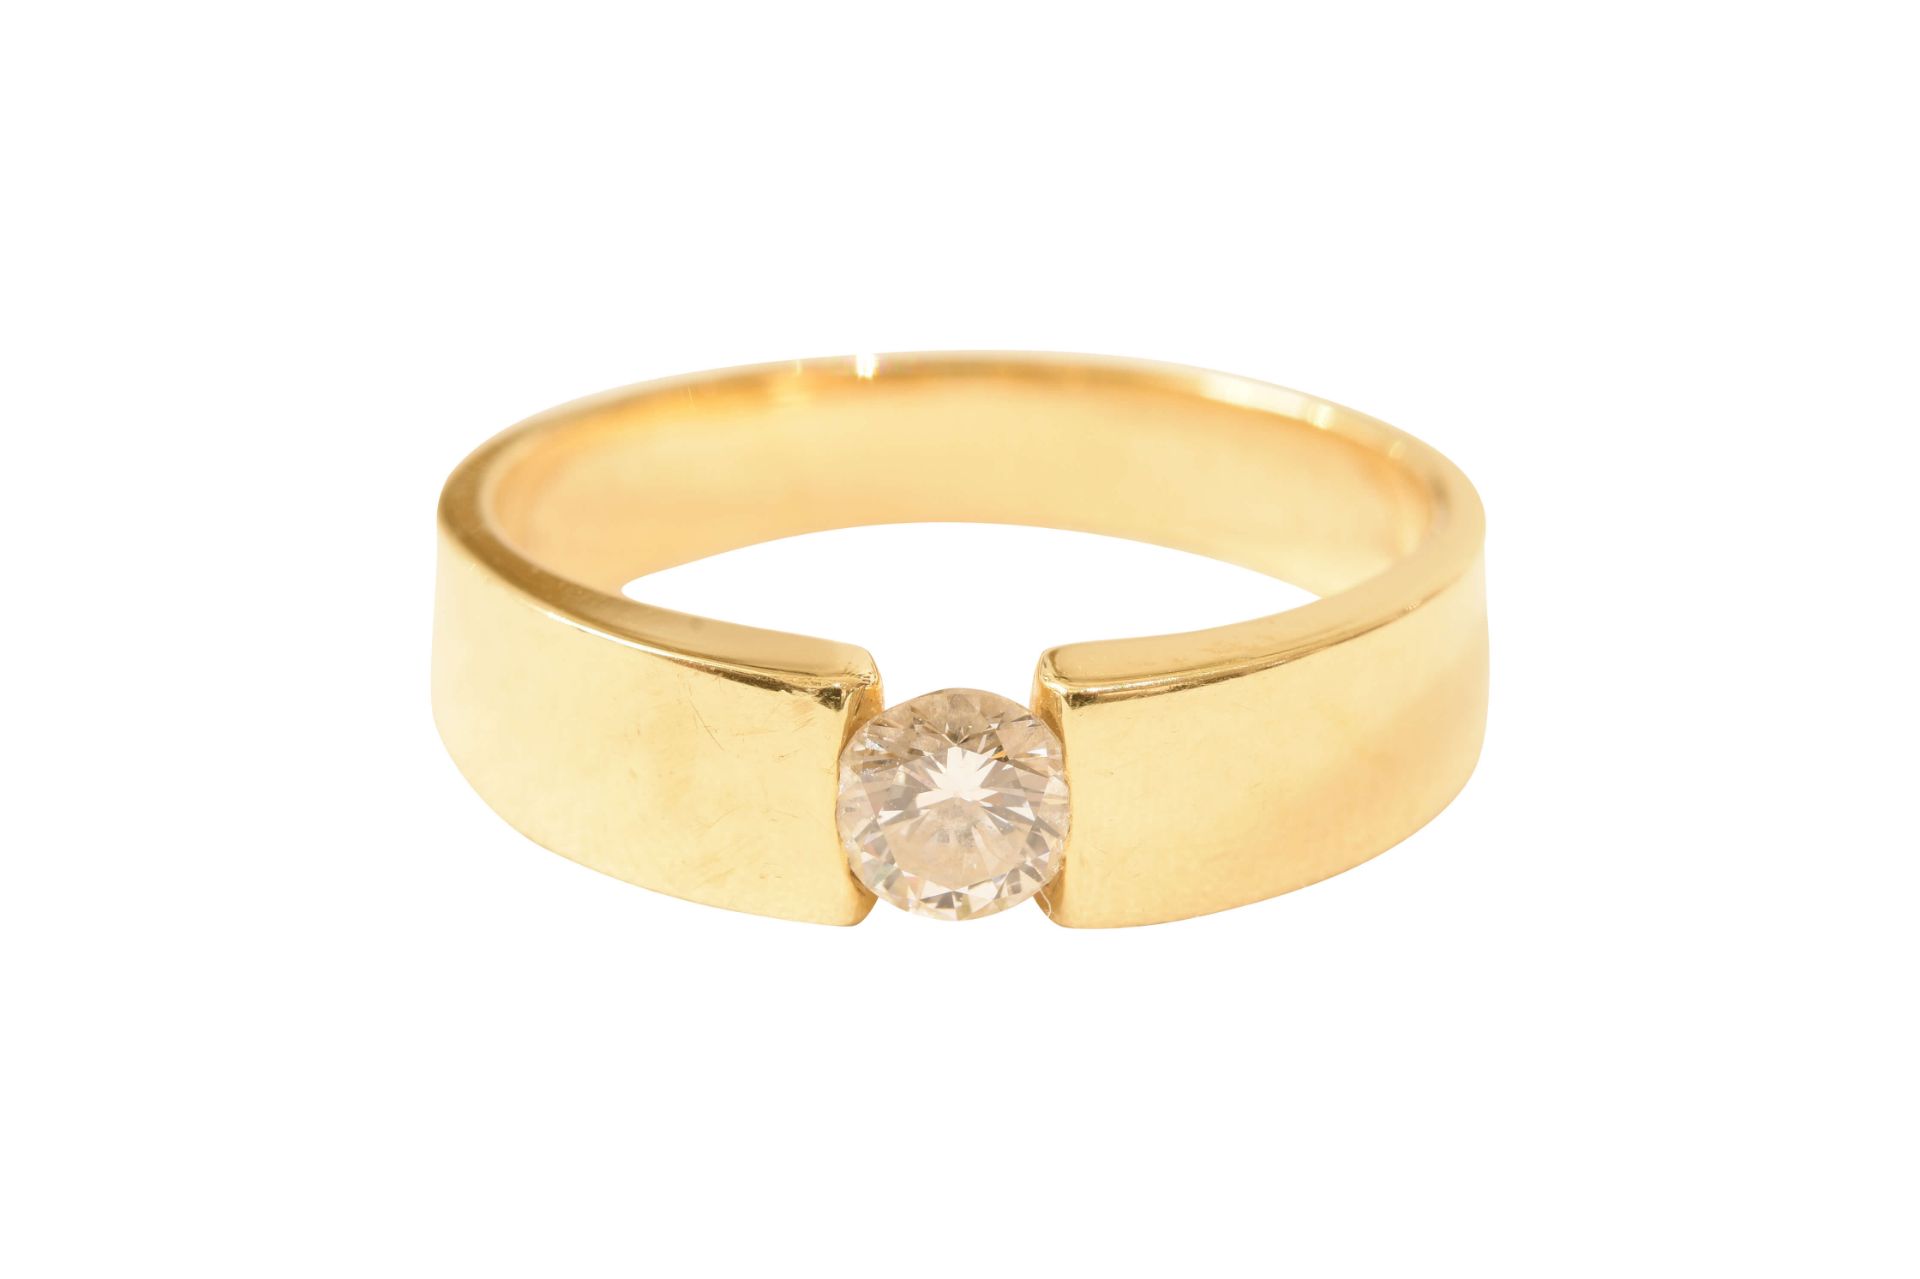 Ring GG mit einem Brillanten|Ring with one Brilliant-Cut Diamond - Image 4 of 5